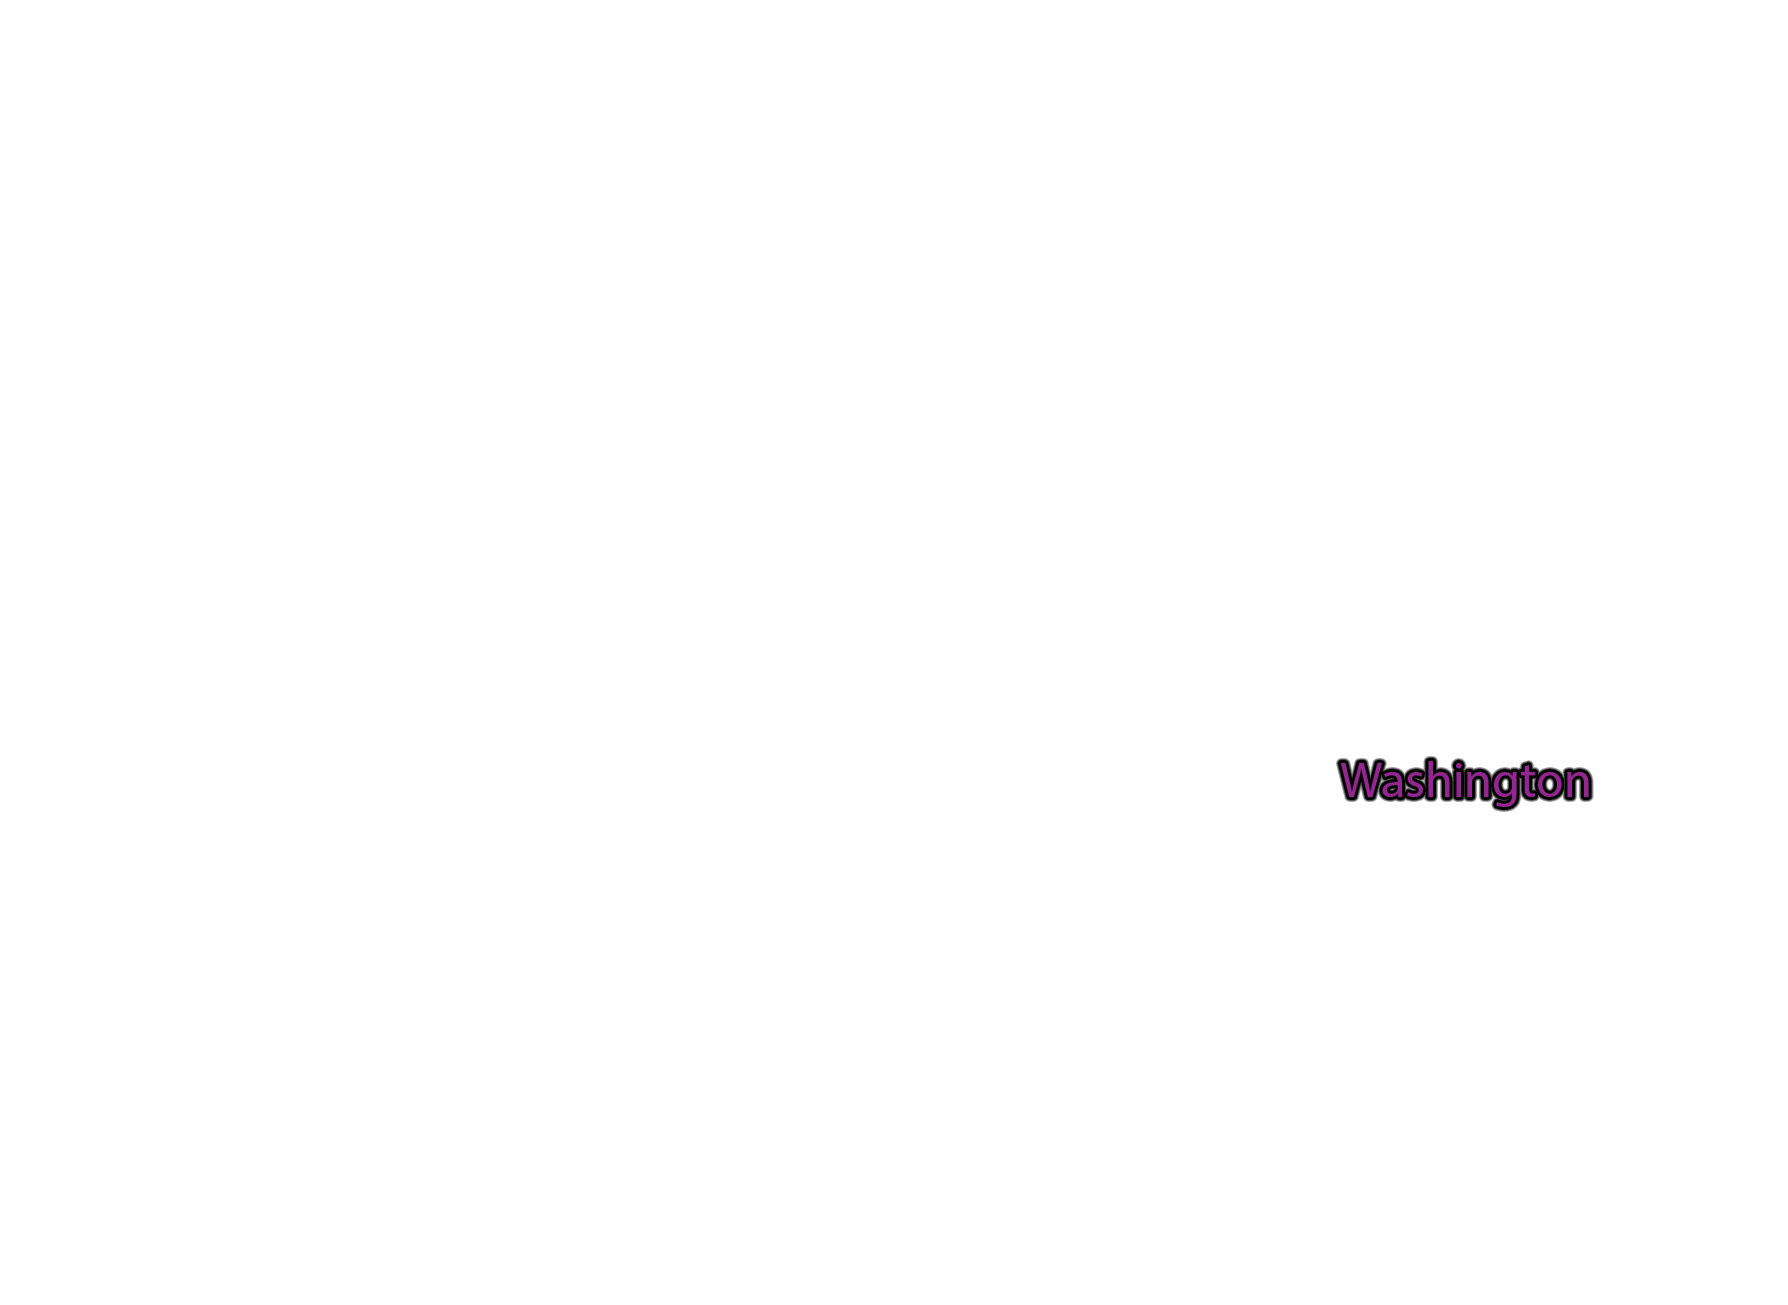 Washington label with glow